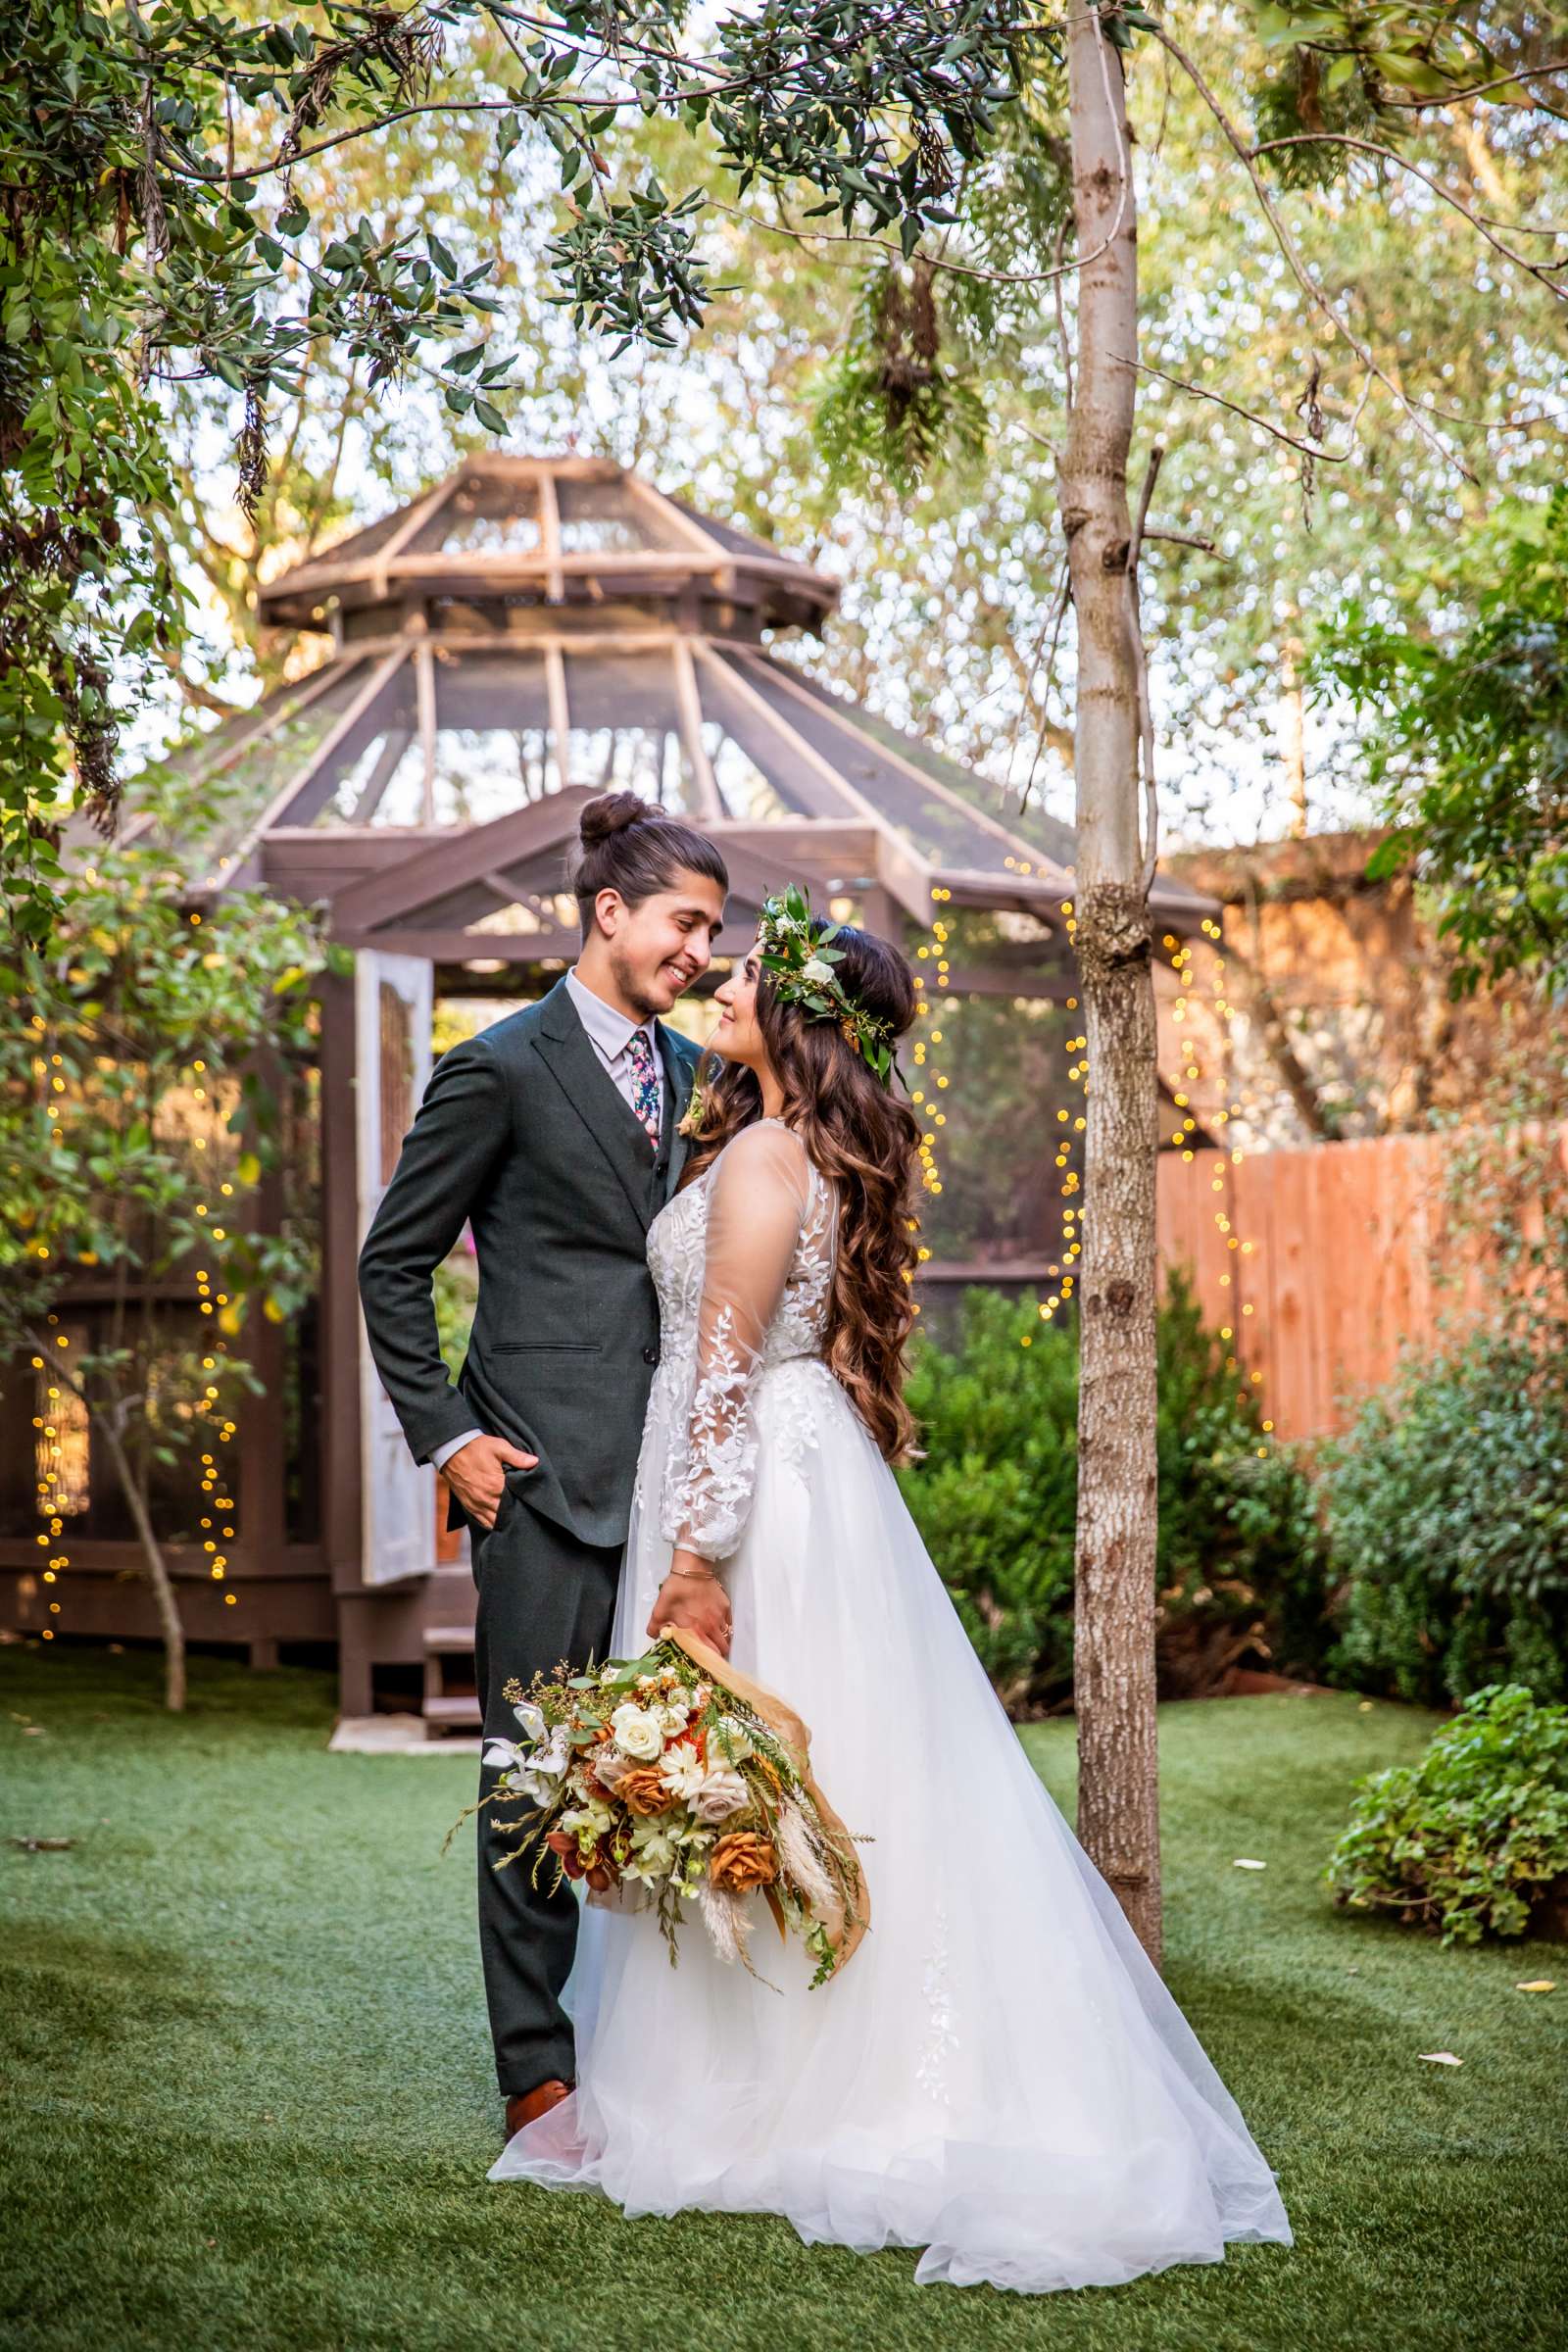 Twin Oaks House & Gardens Wedding Estate Wedding, Vanessa and Nicholas Wedding Photo #1 by True Photography